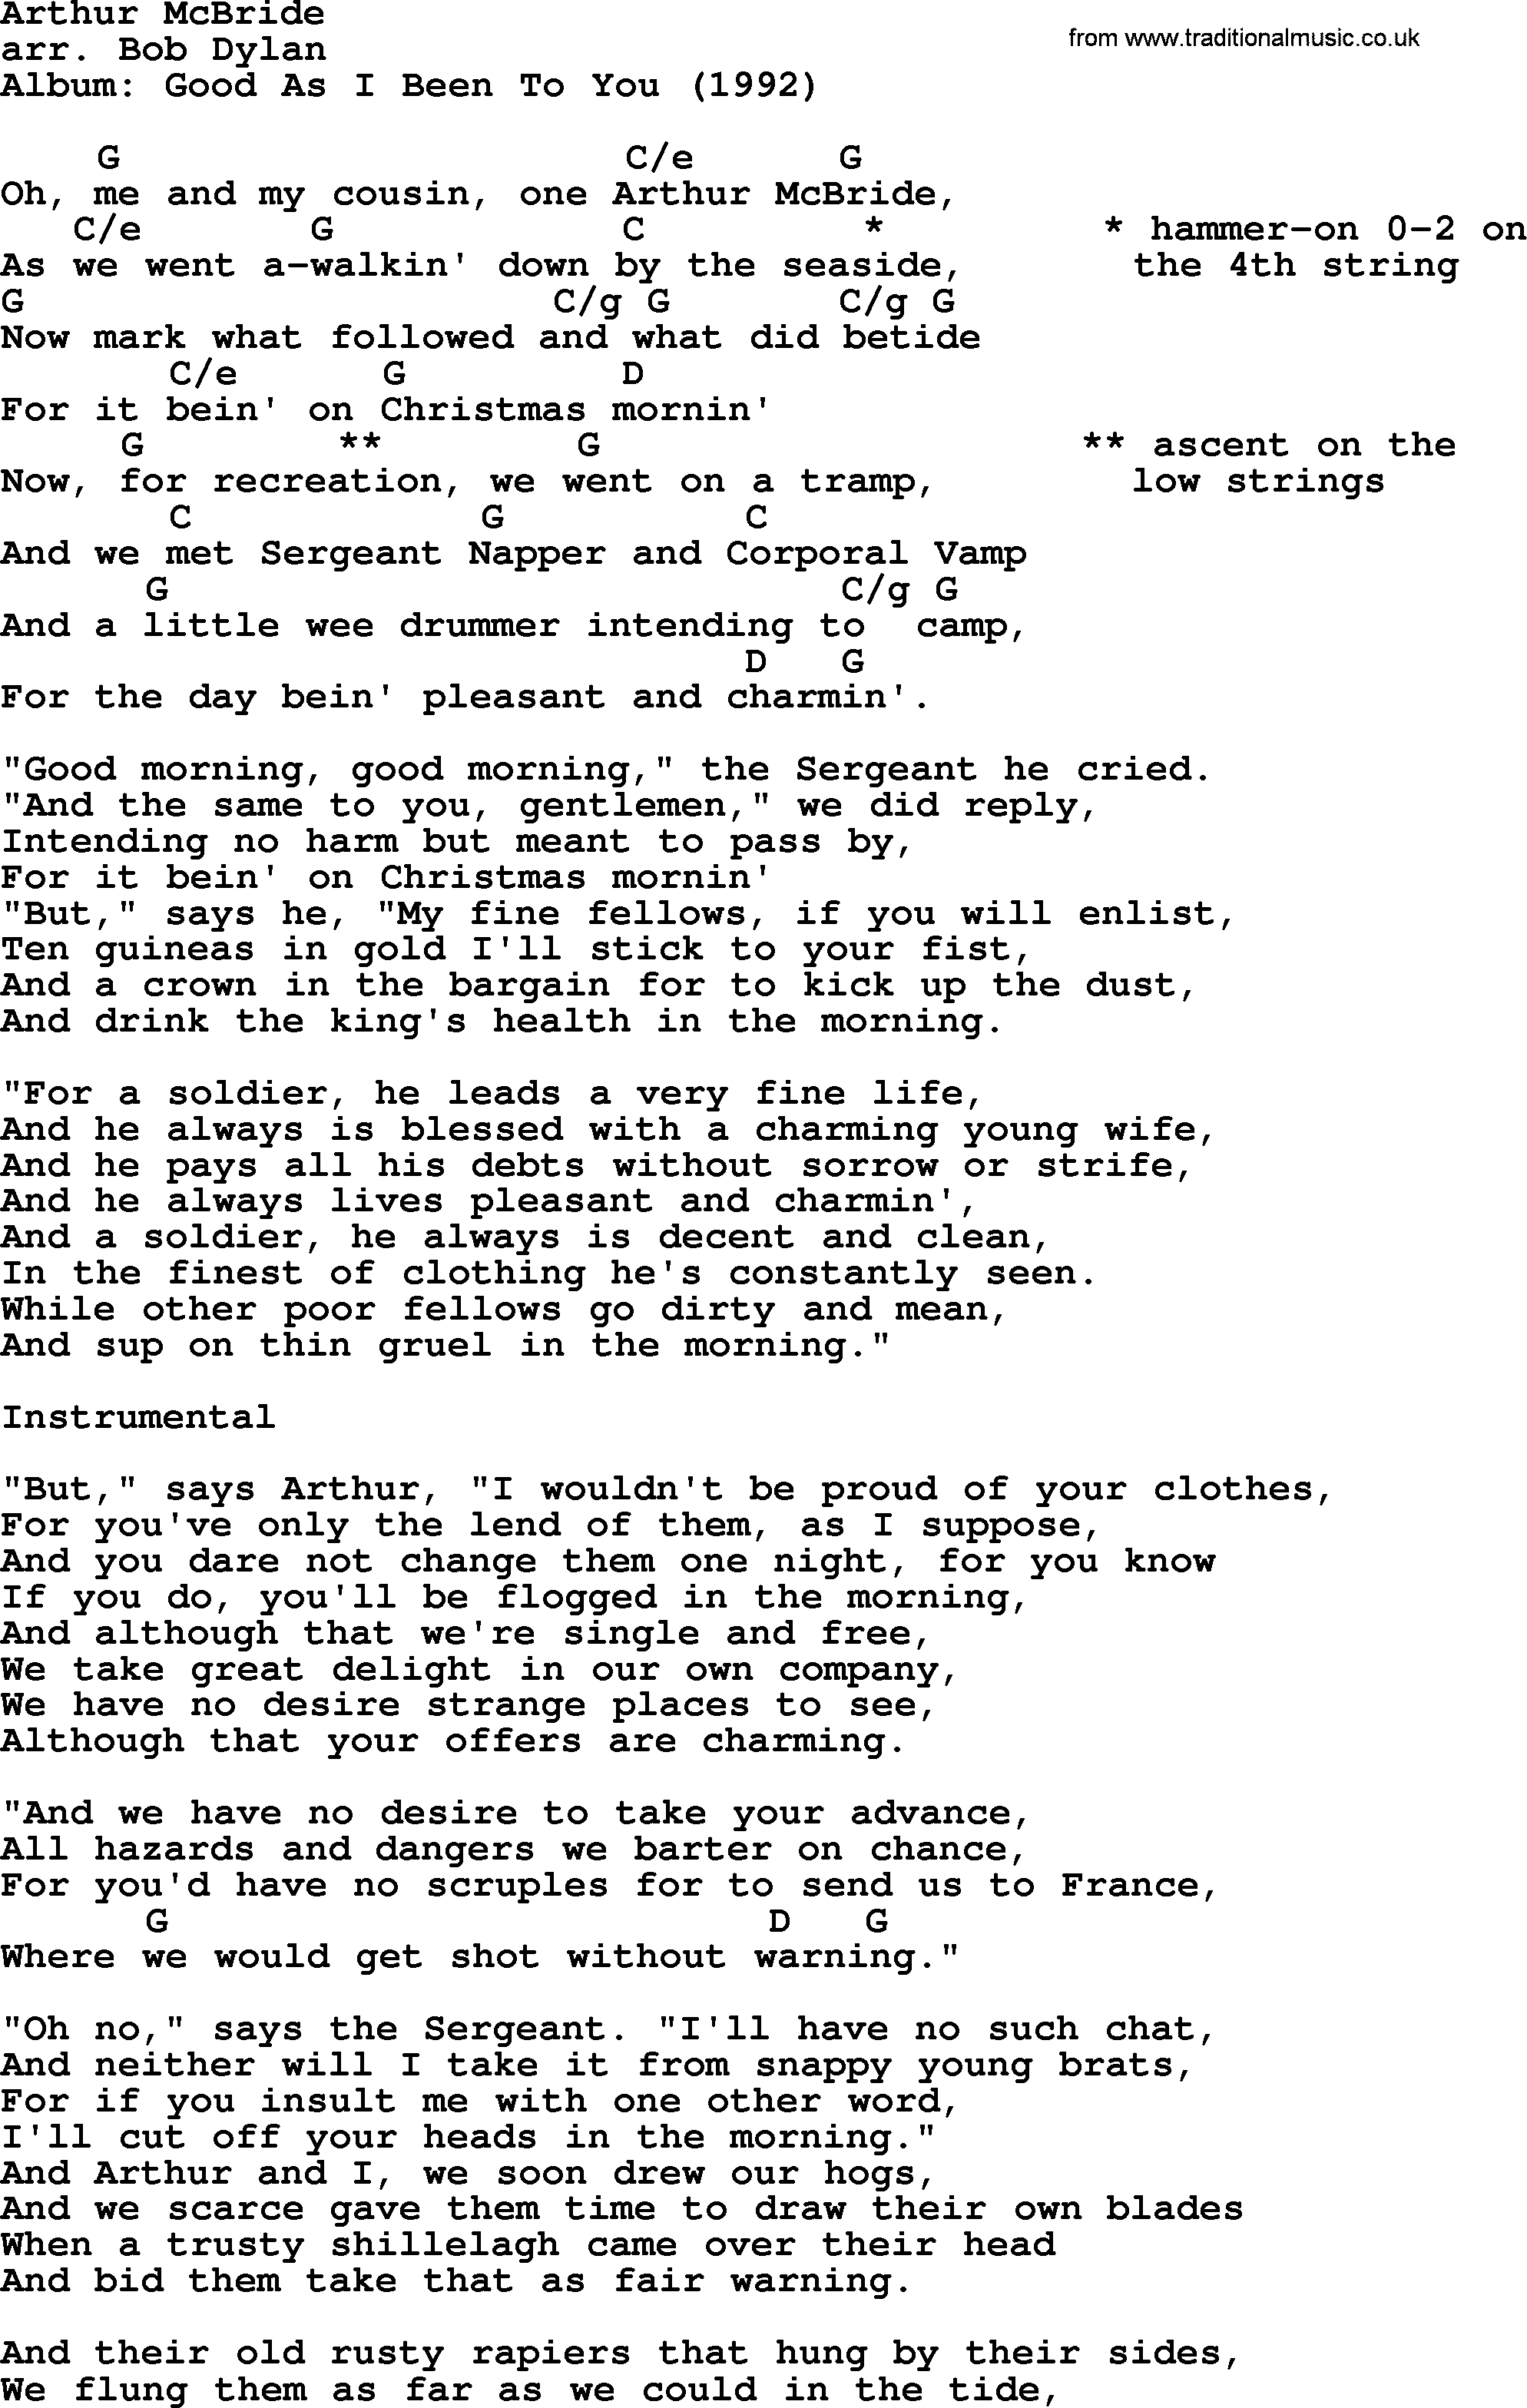 Bob Dylan song, lyrics with chords - Arthur McBride